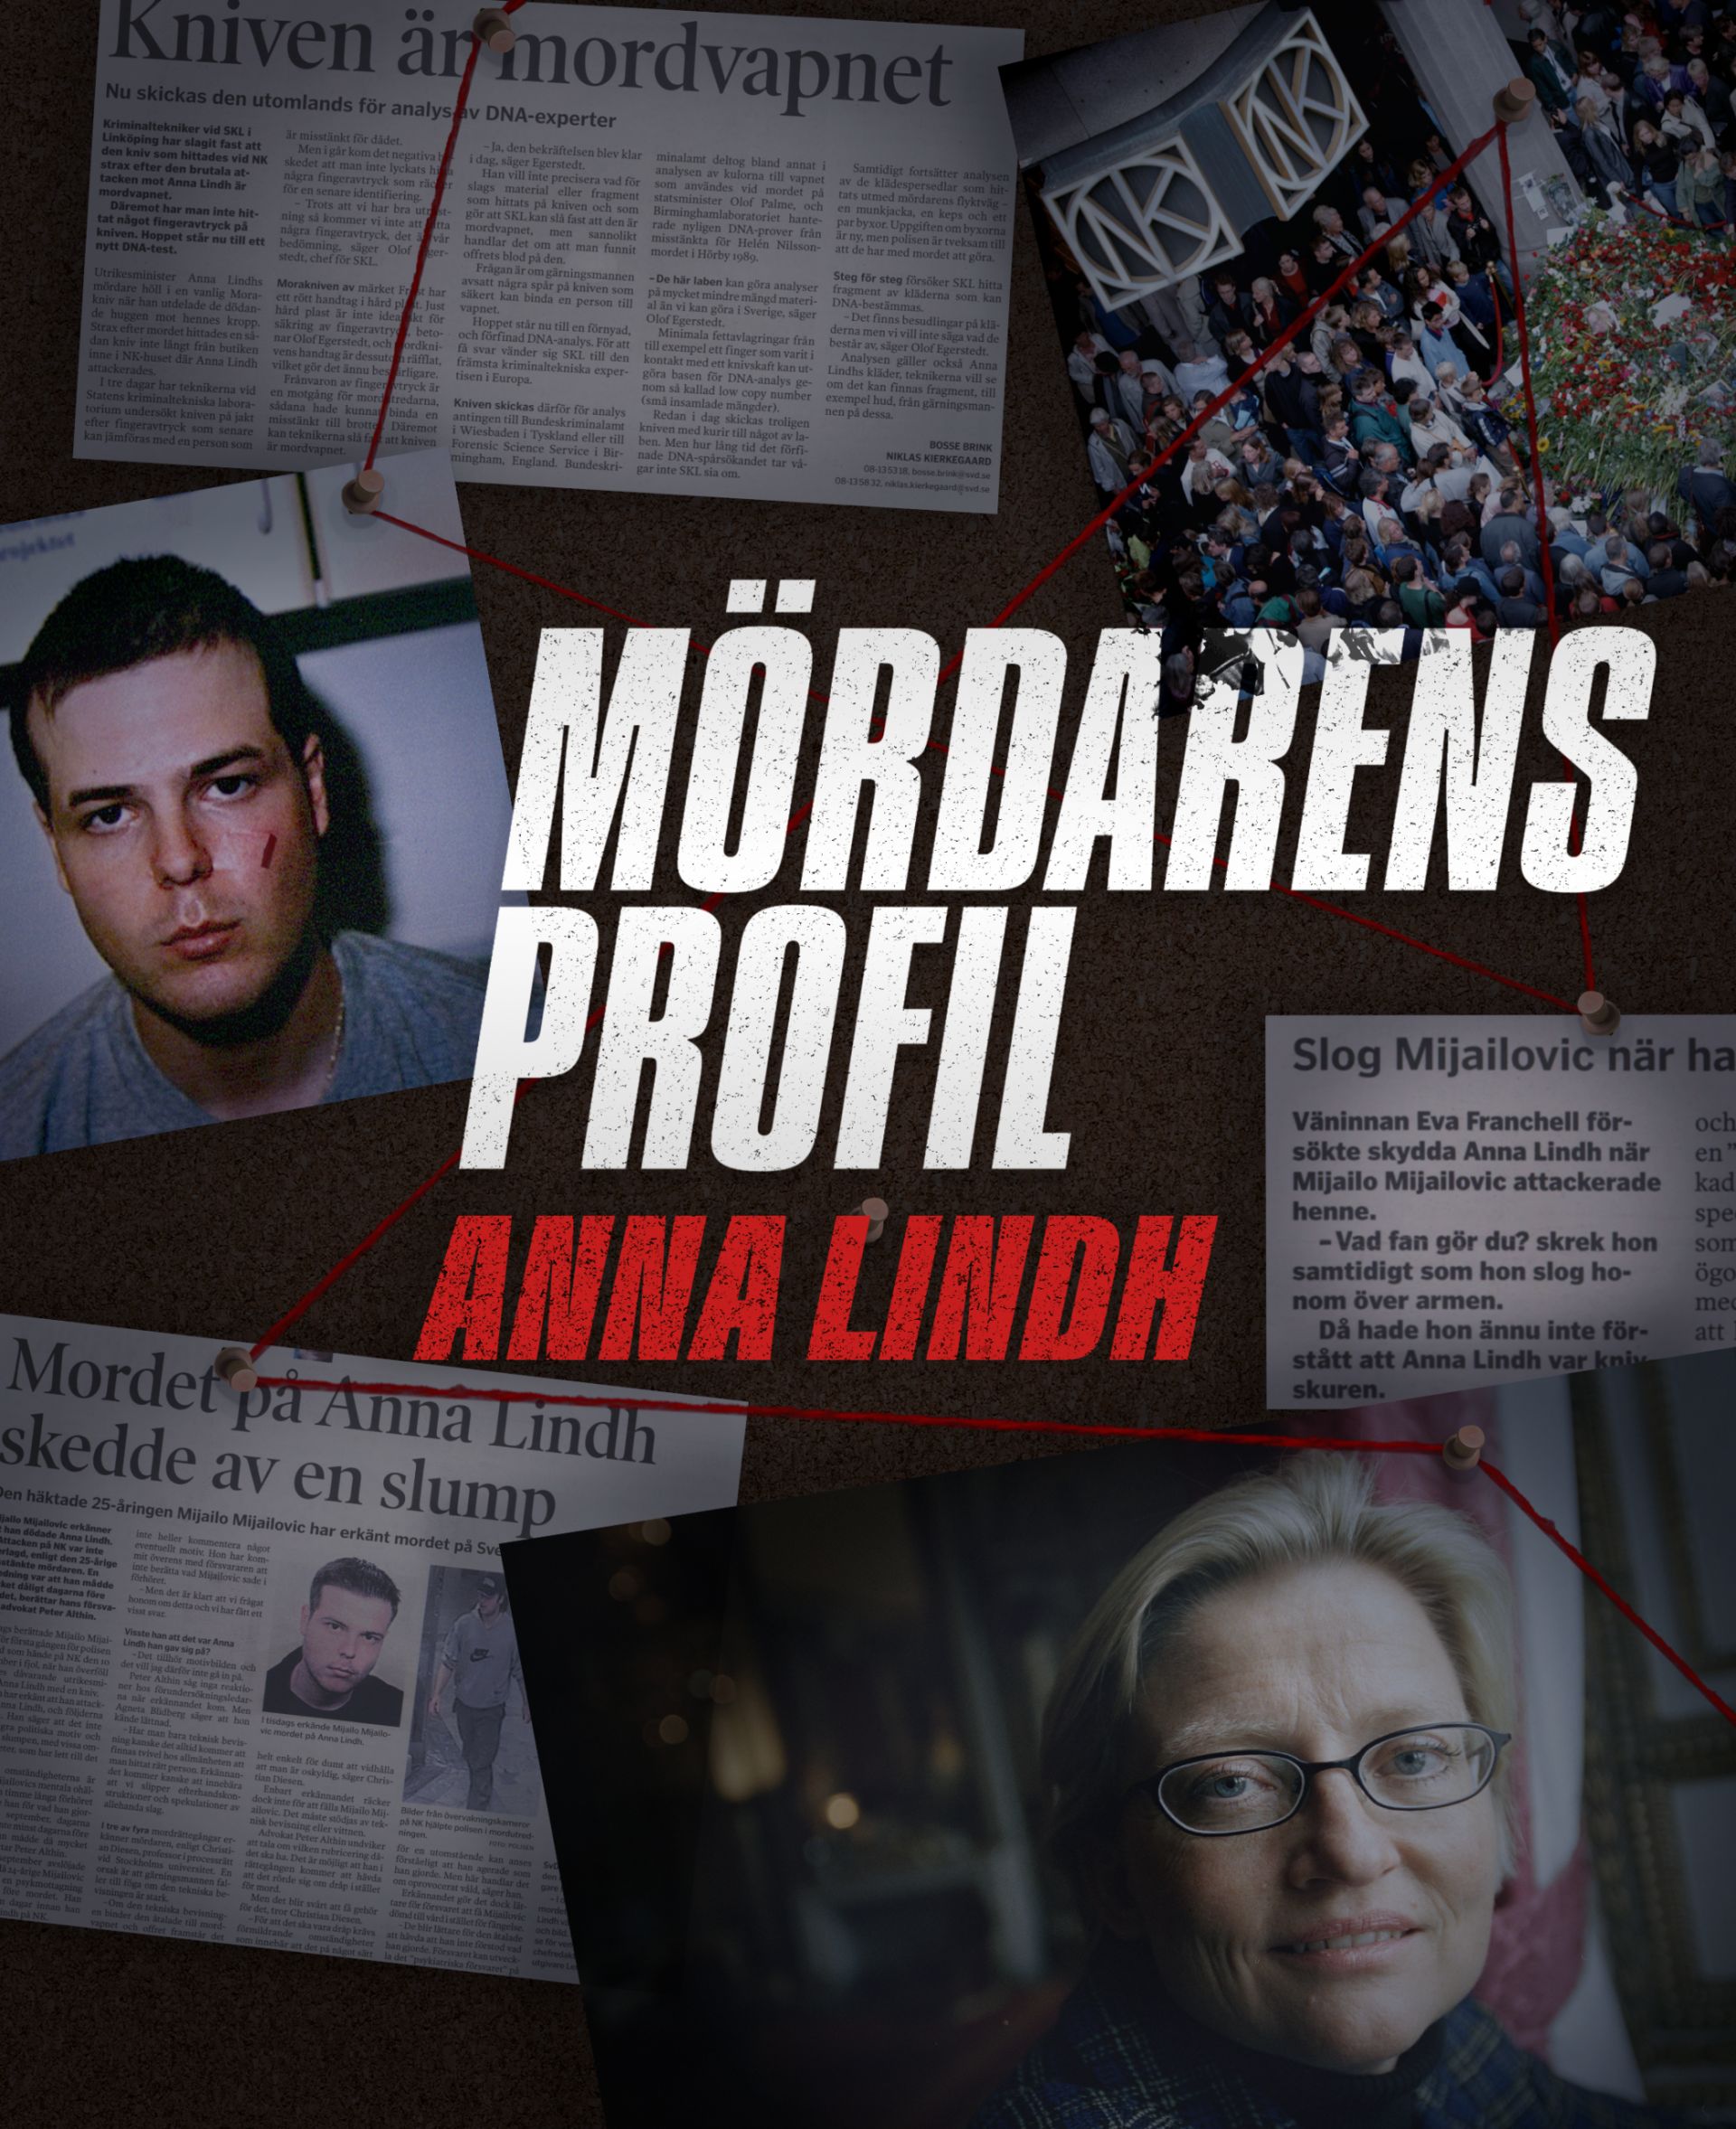 Mördarens profil: Anna Lindh